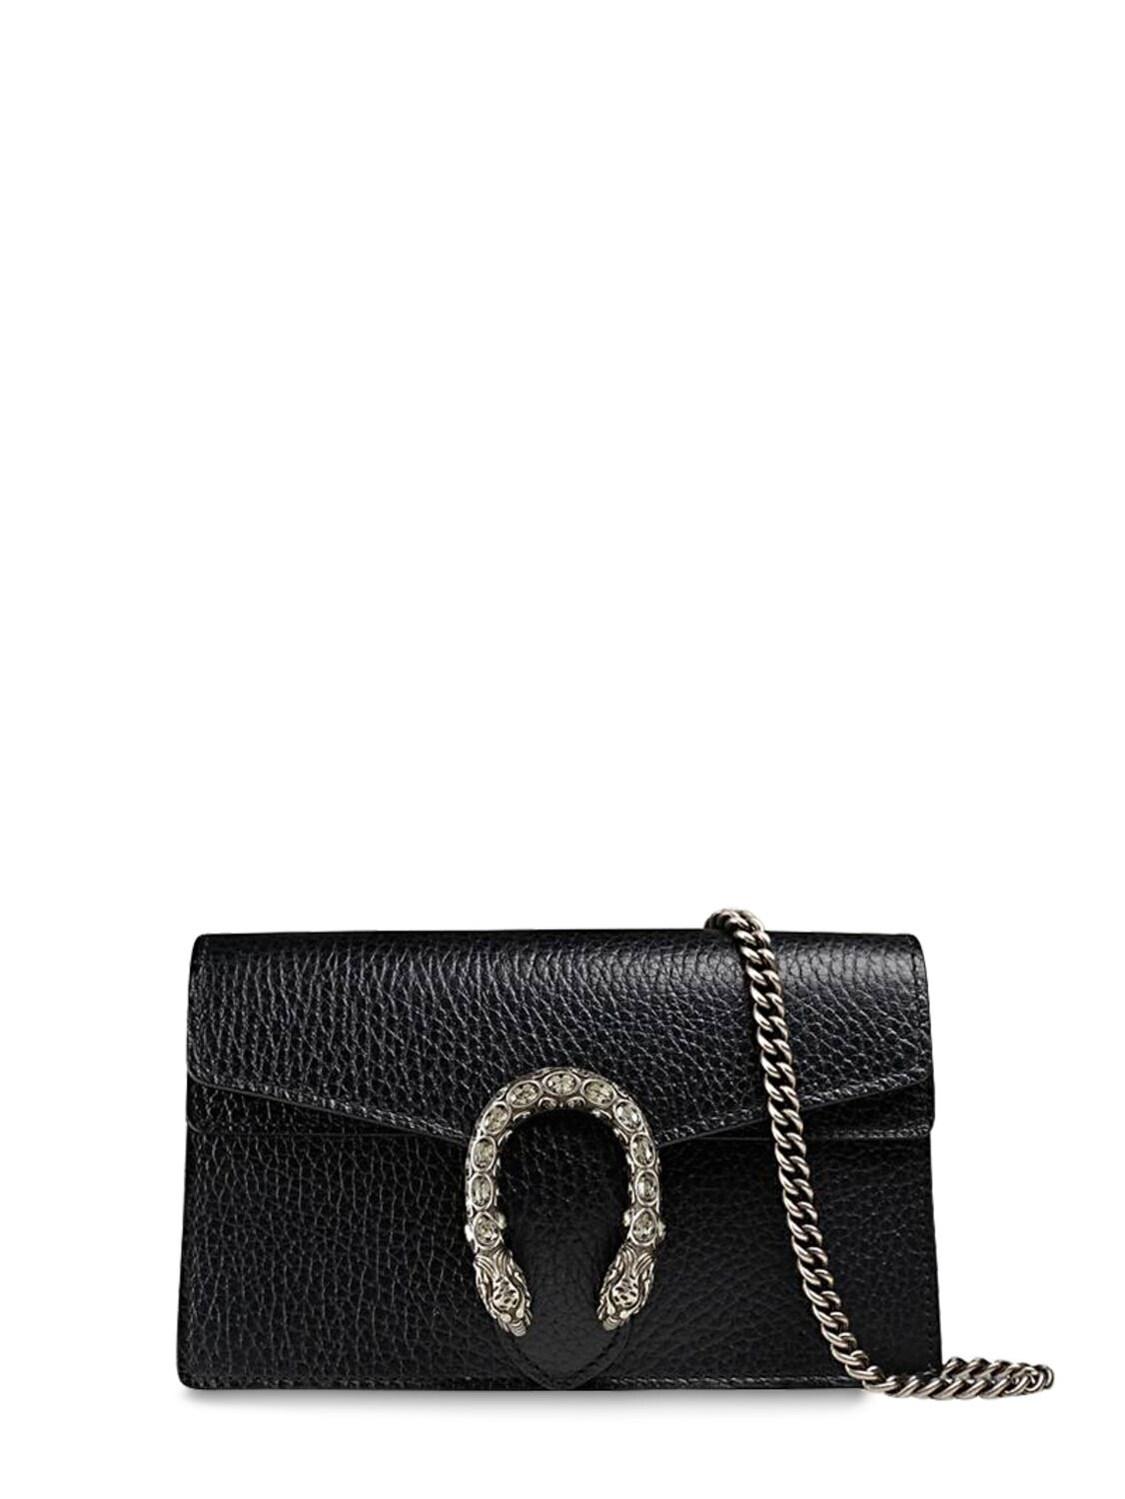 Gucci Leather Dionysus Shoulder Bag in Black - Save 65% - Lyst